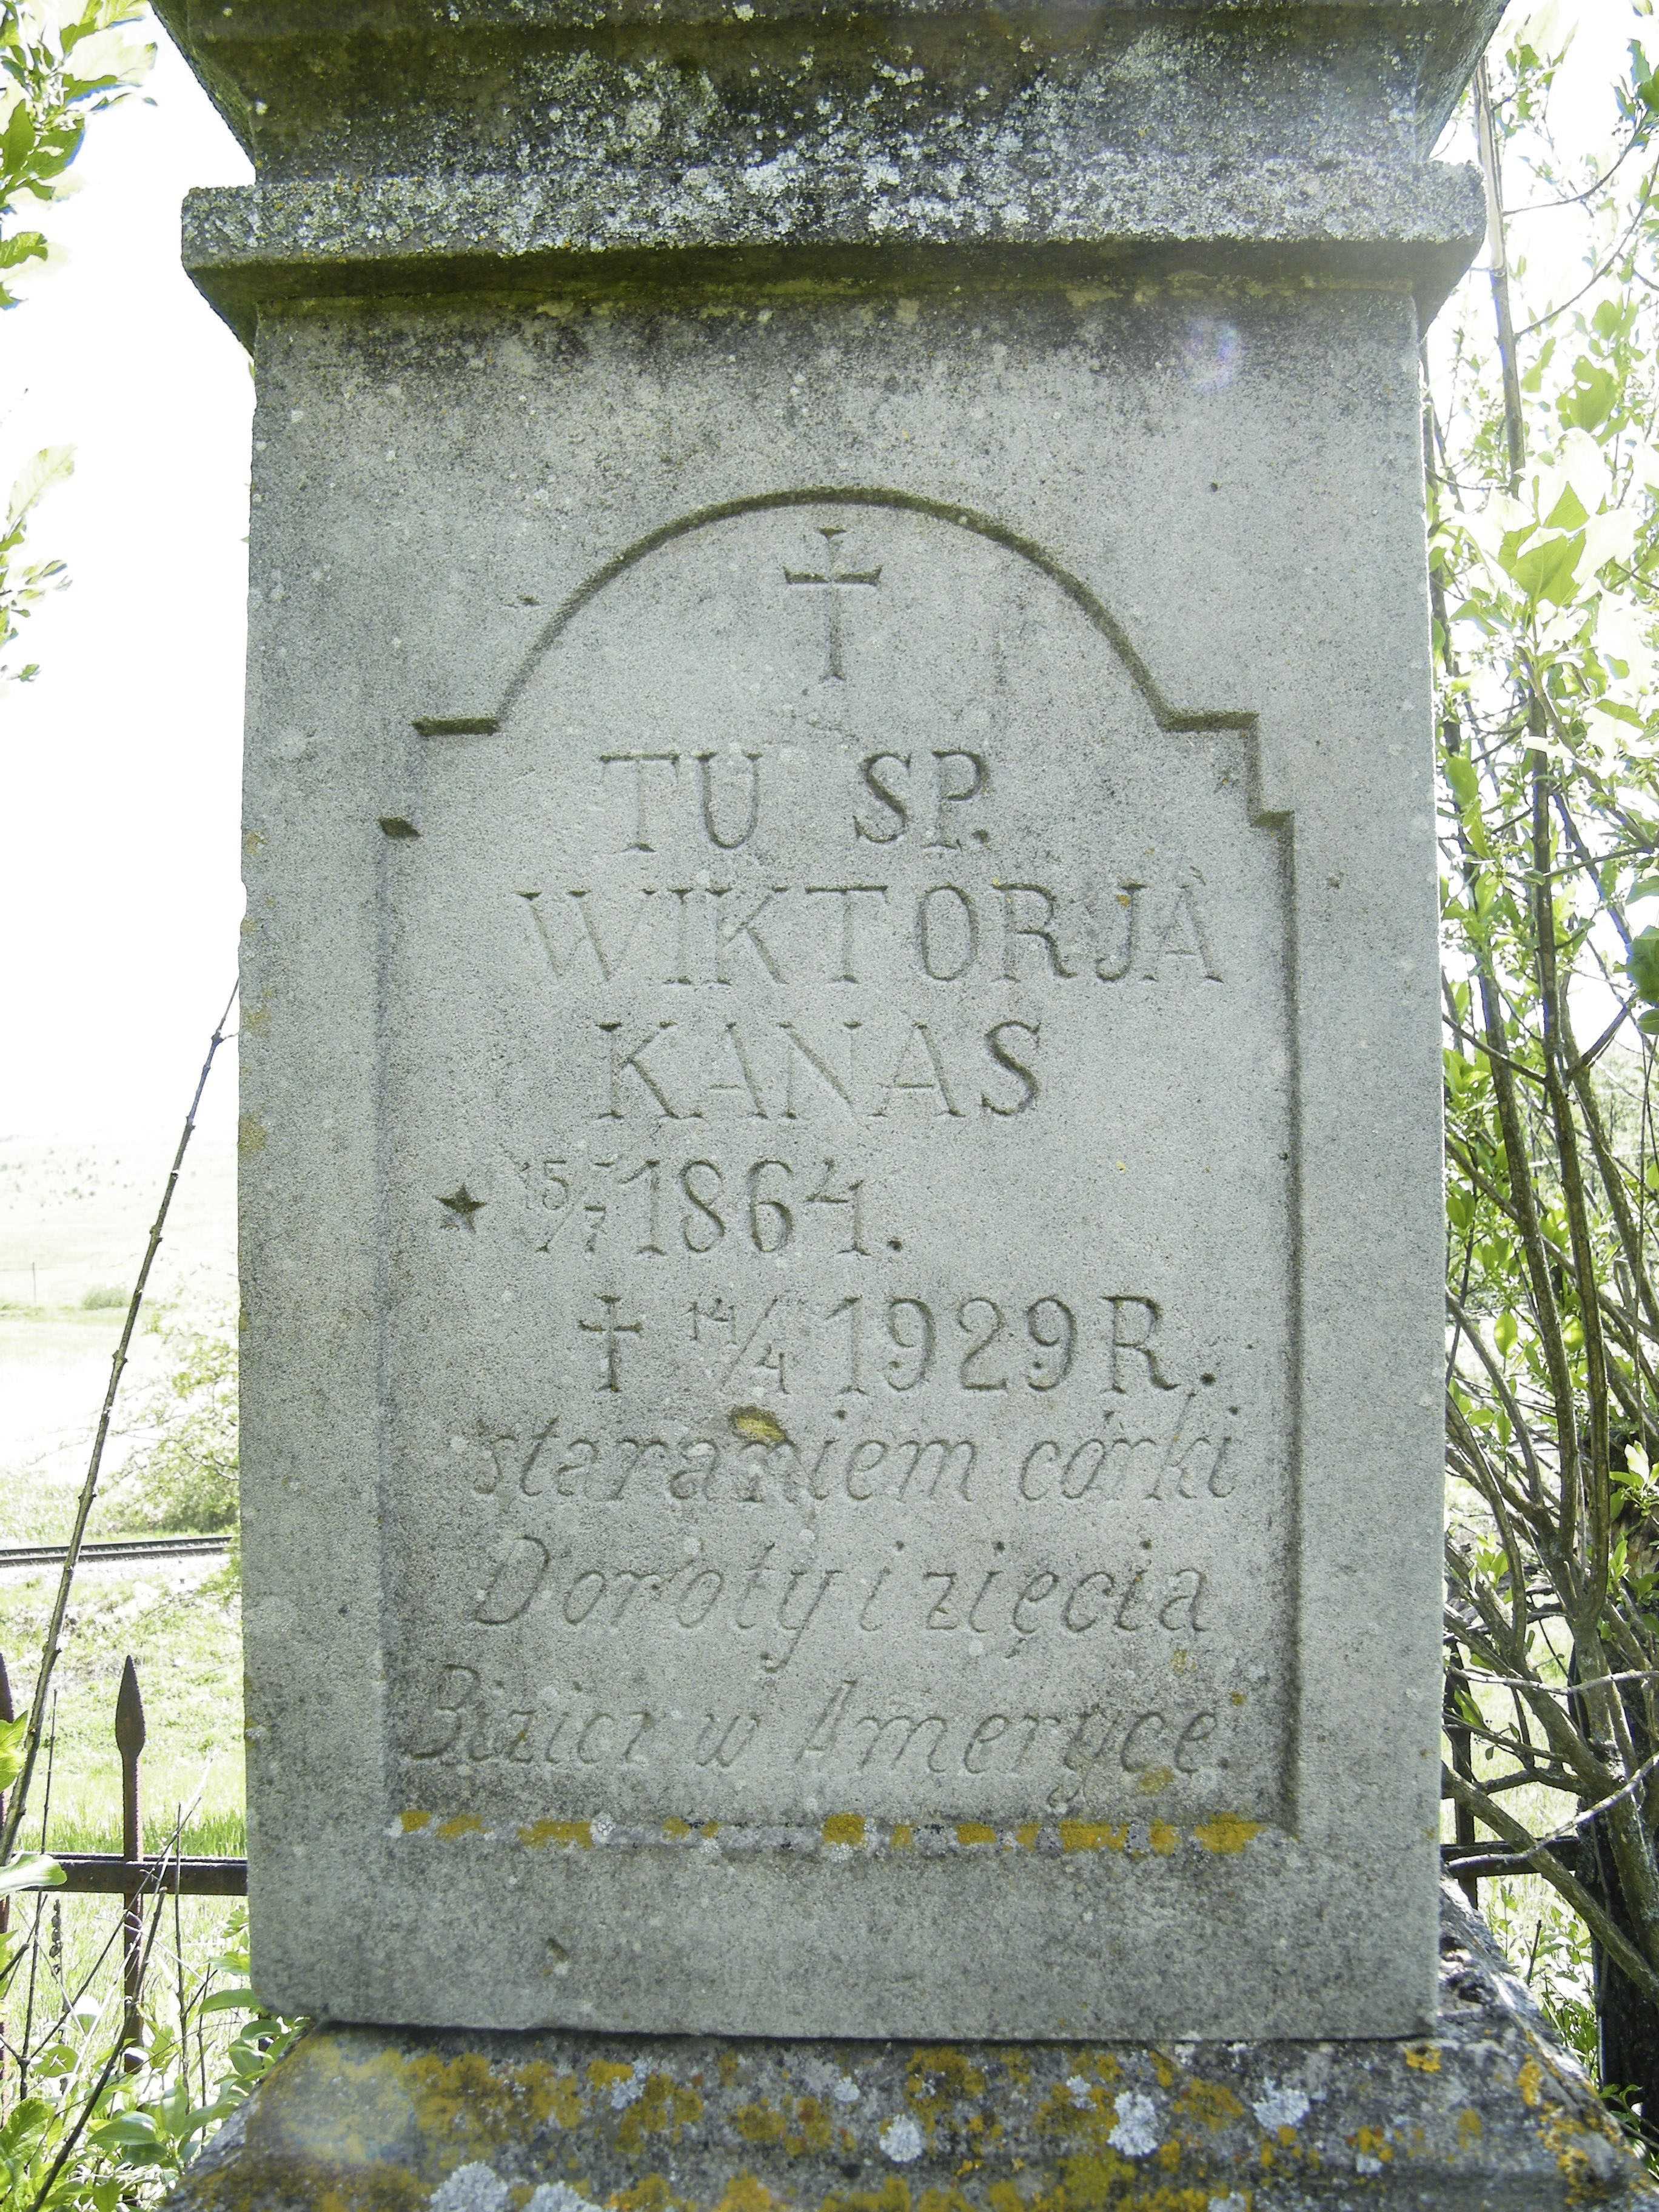 Inscription from the gravestone of Wiktoria Kanas, cemetery in Łozowa